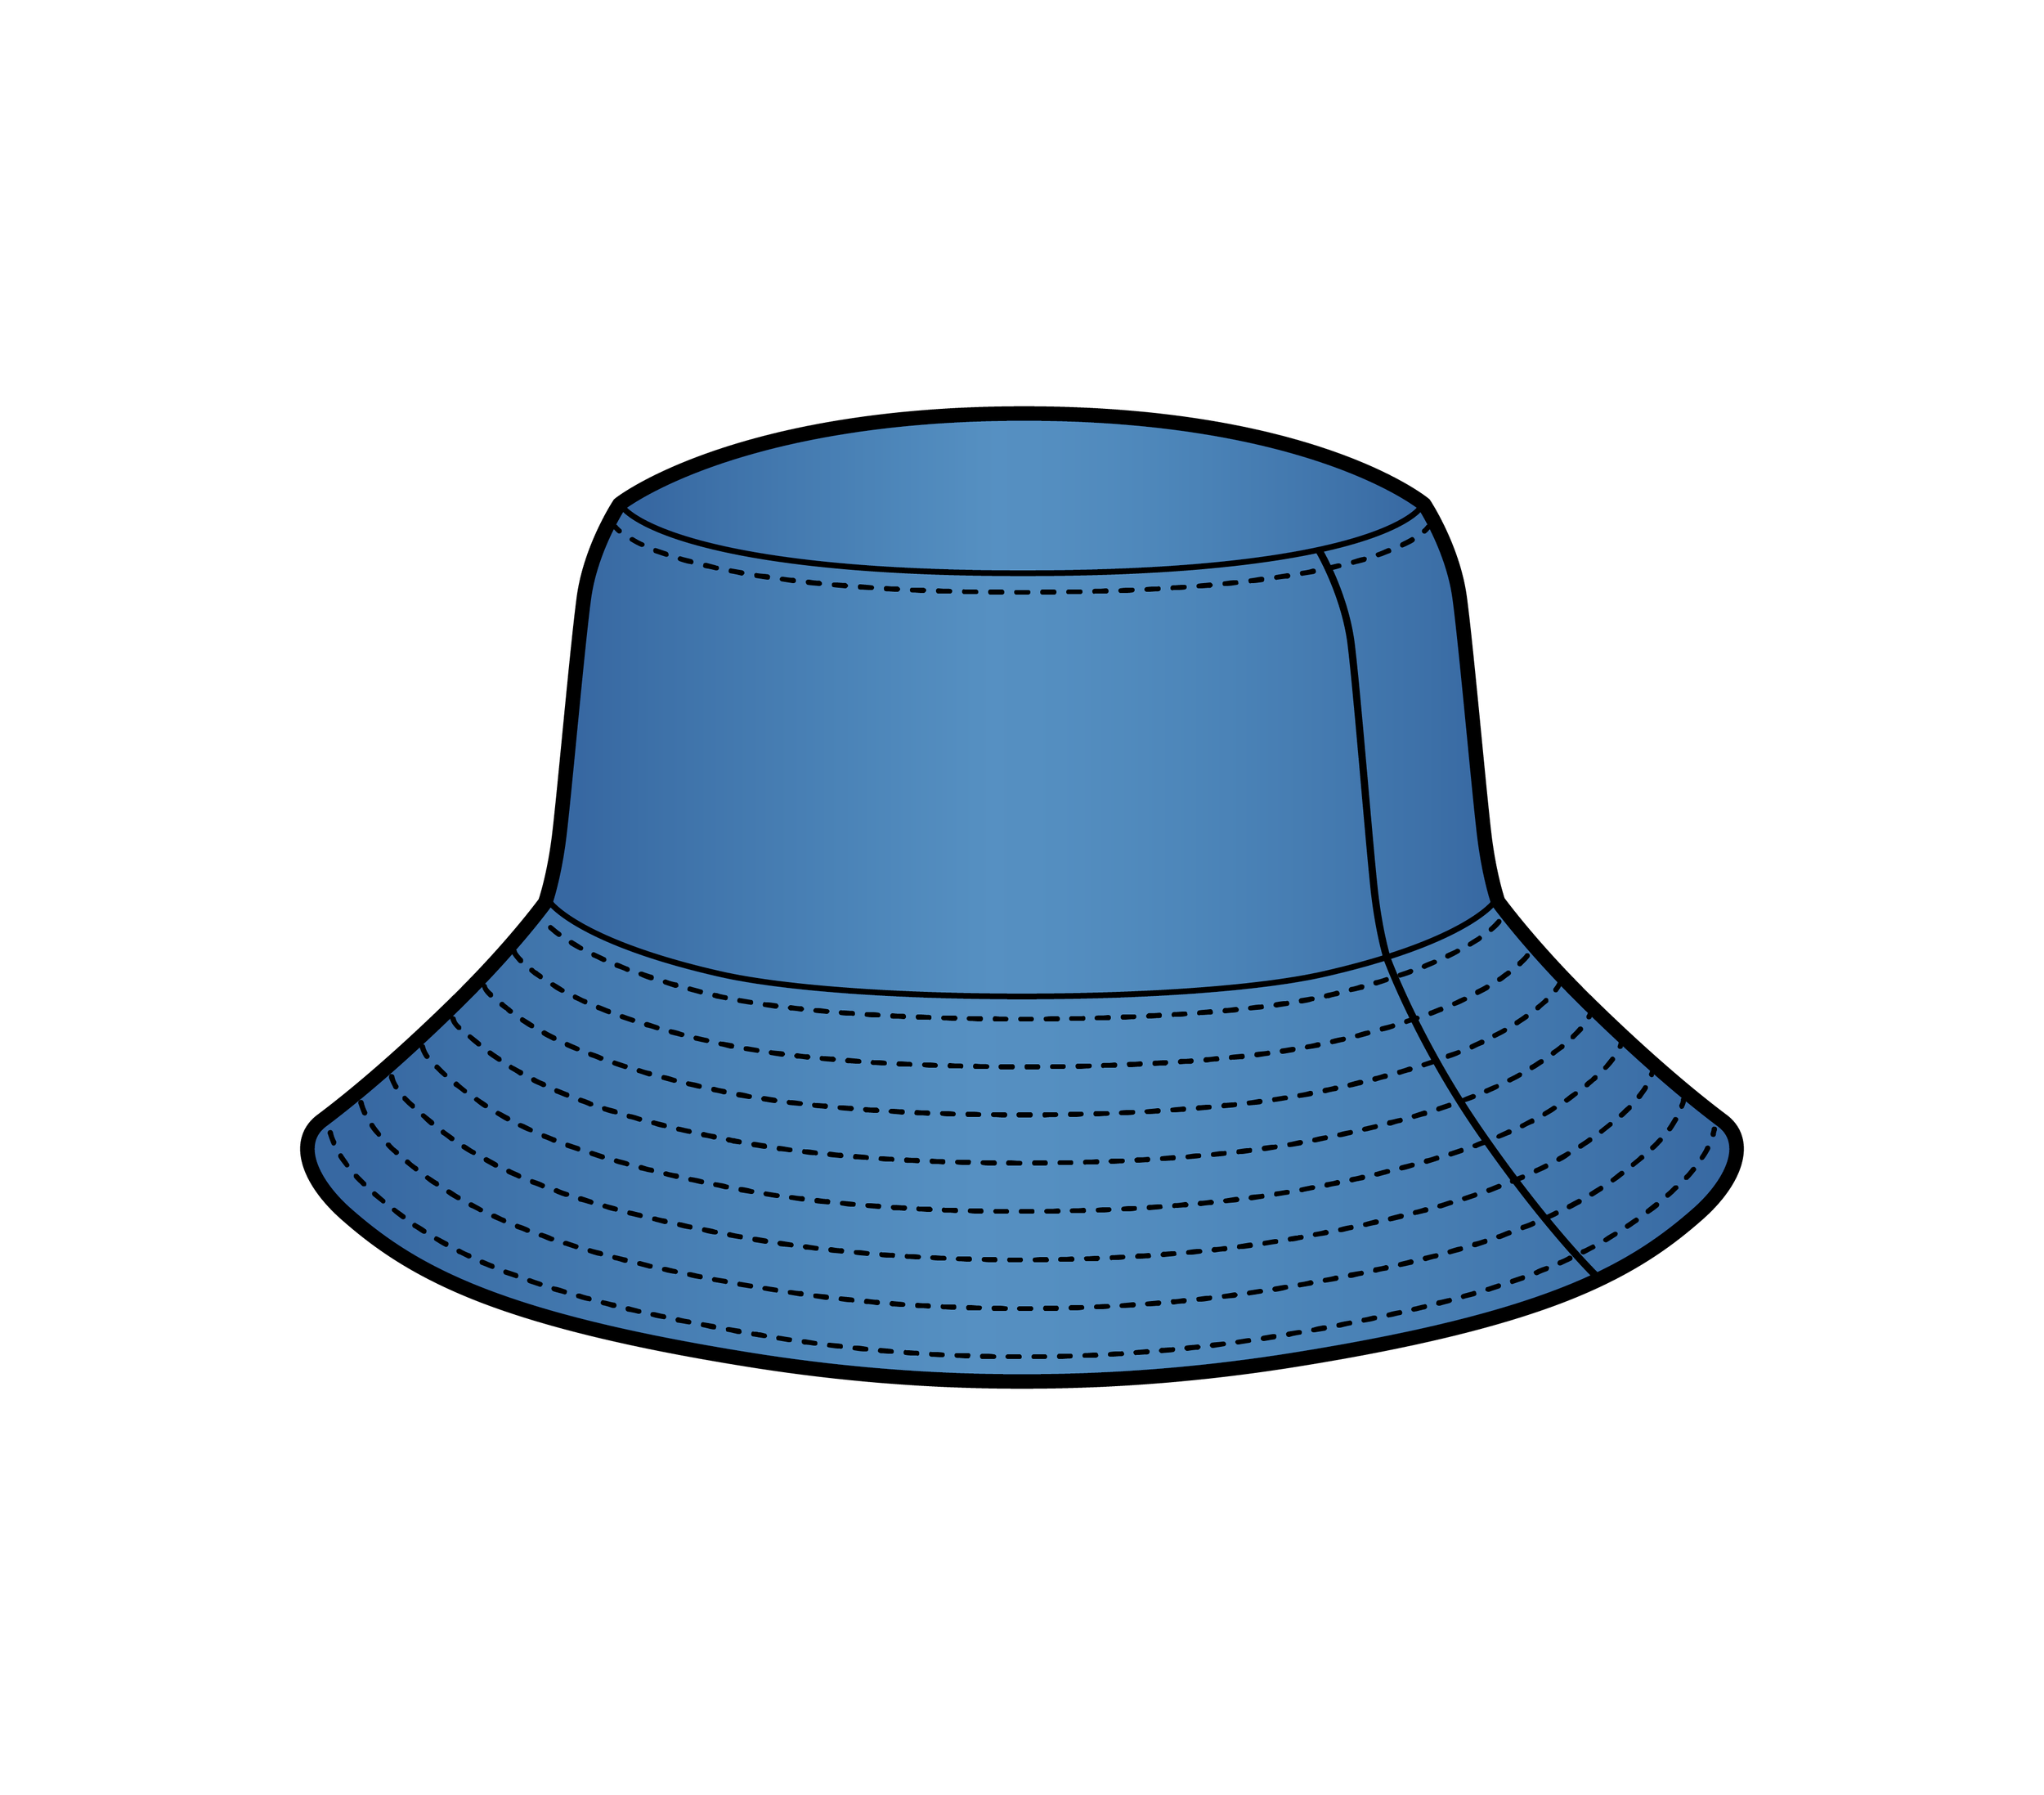 Bucket hat sticker Vectors & Illustrations for Free Download | Freepik ...